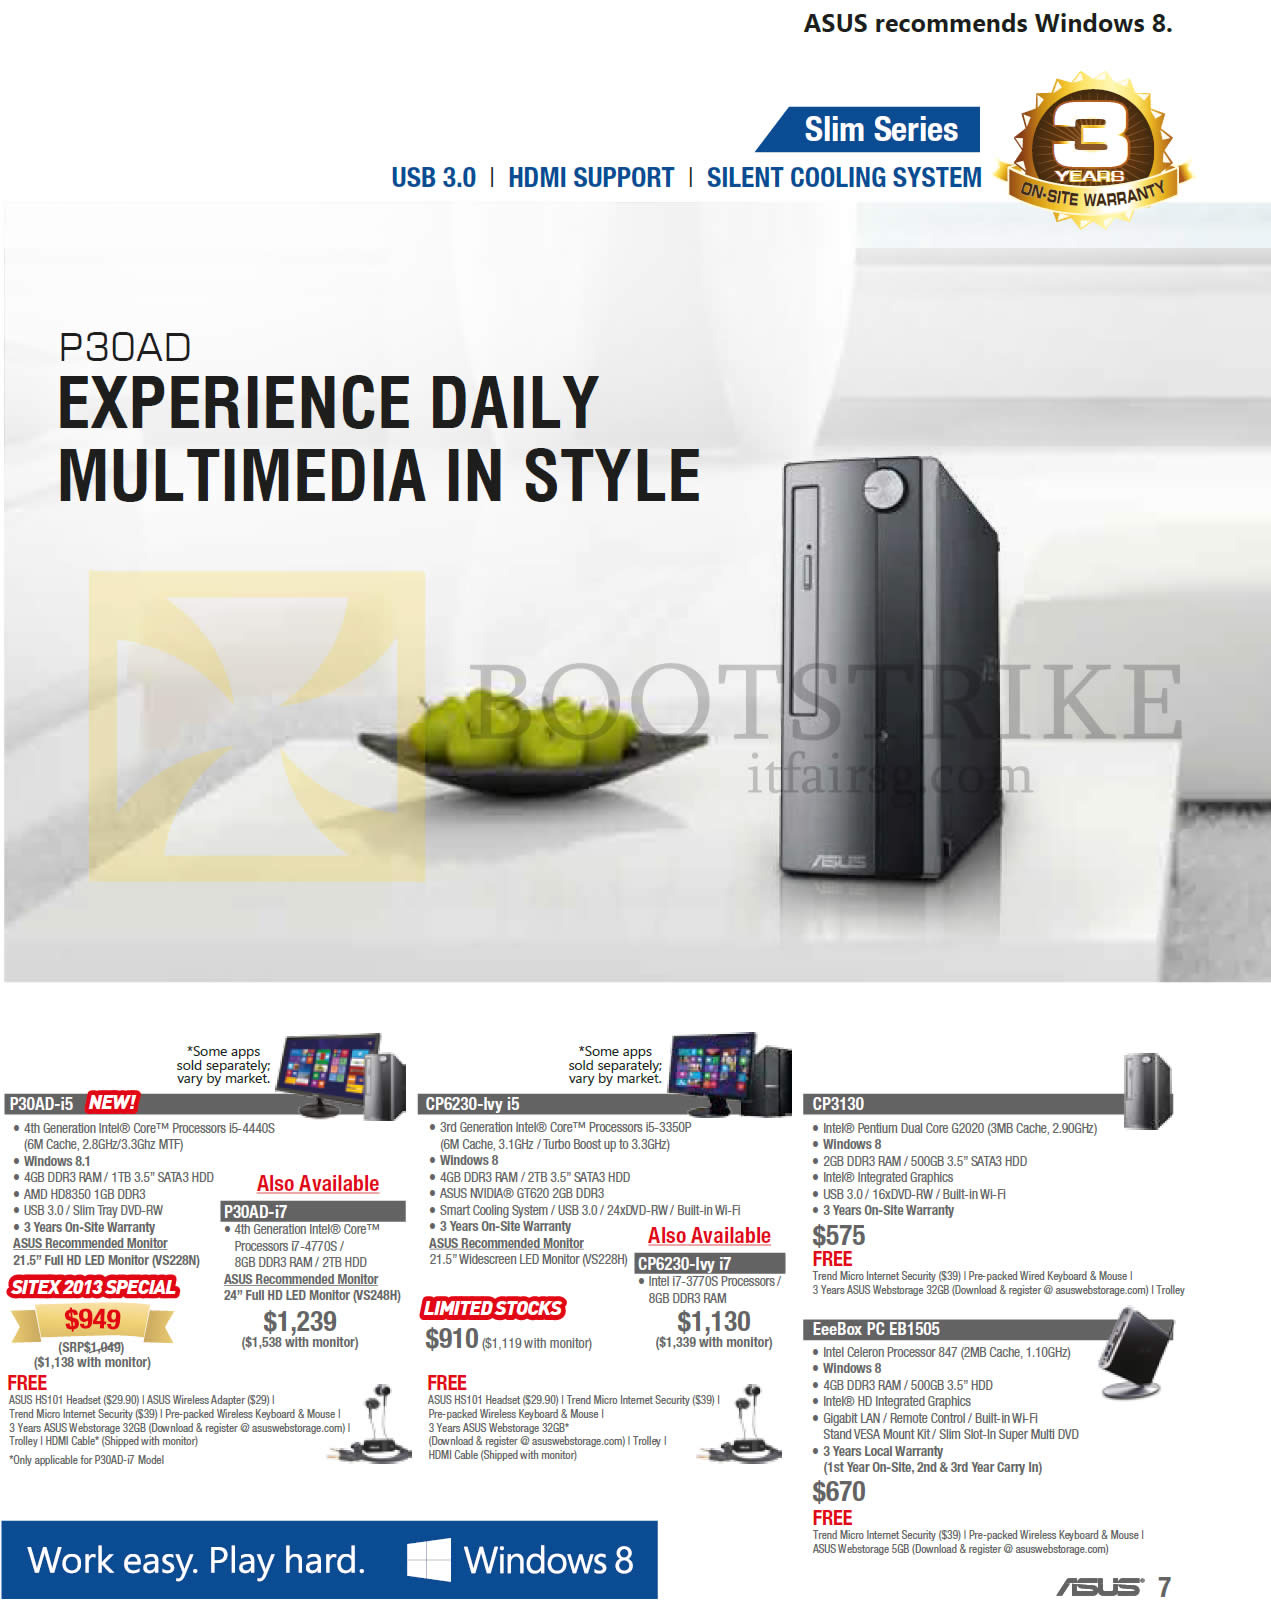 SITEX 2013 price list image brochure of ASUS Desktop PCs Slim Silent P30AD, CP6230, CP3130, Eeebox PC EB1505